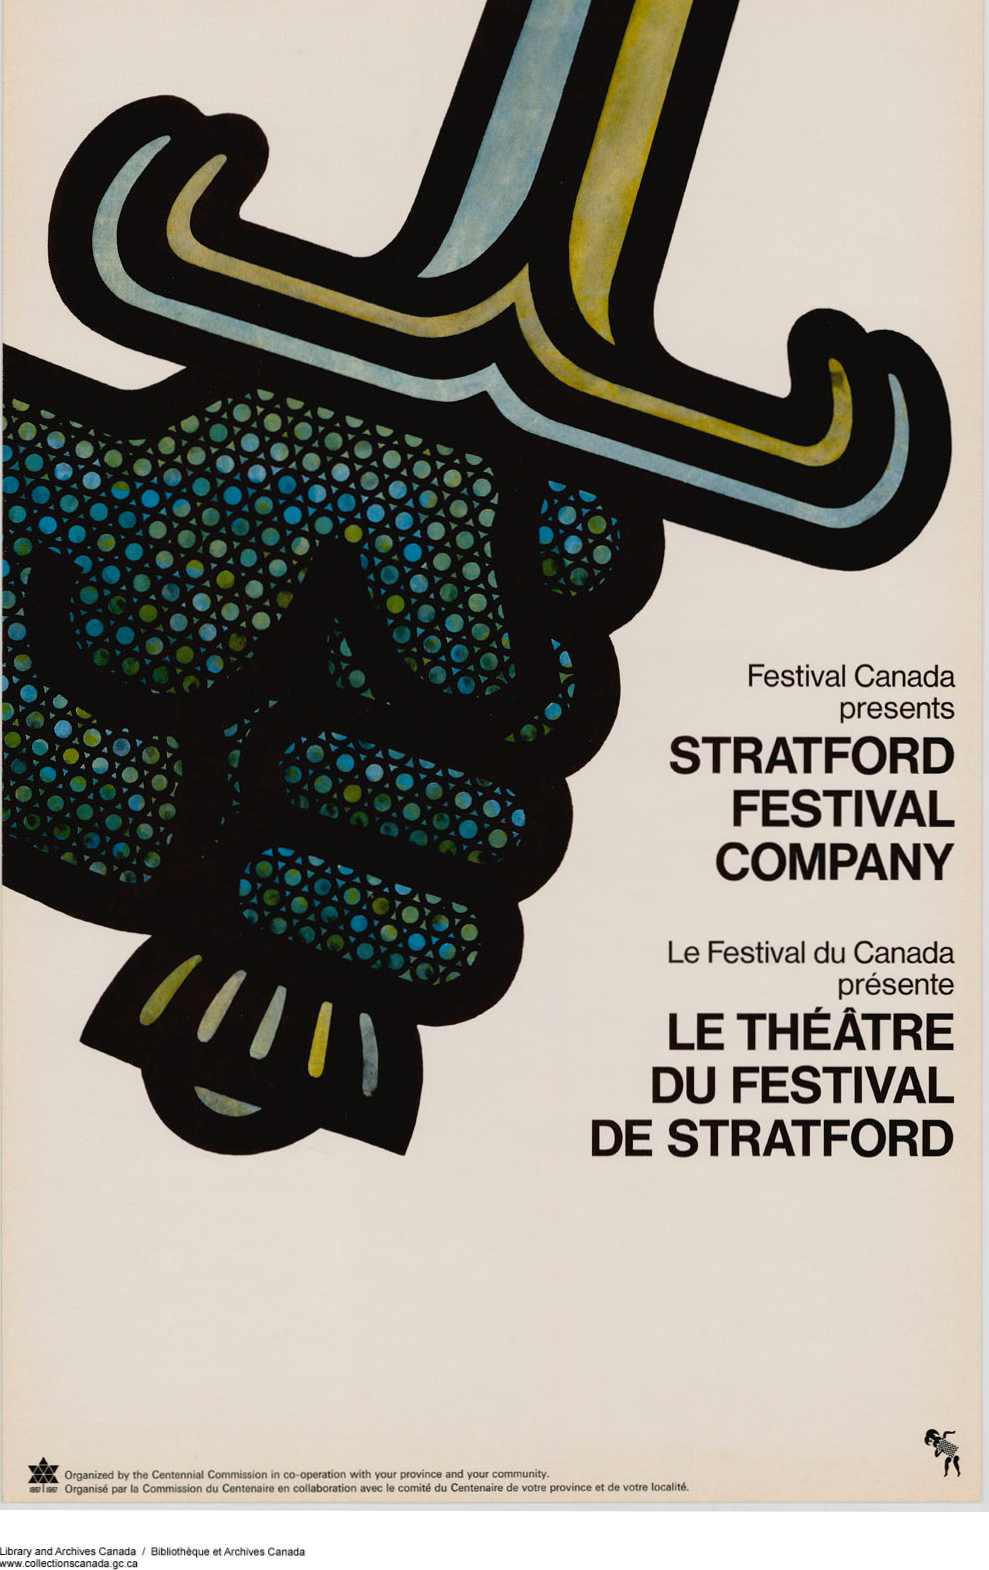 A historic Stratford Festival pamphlet 